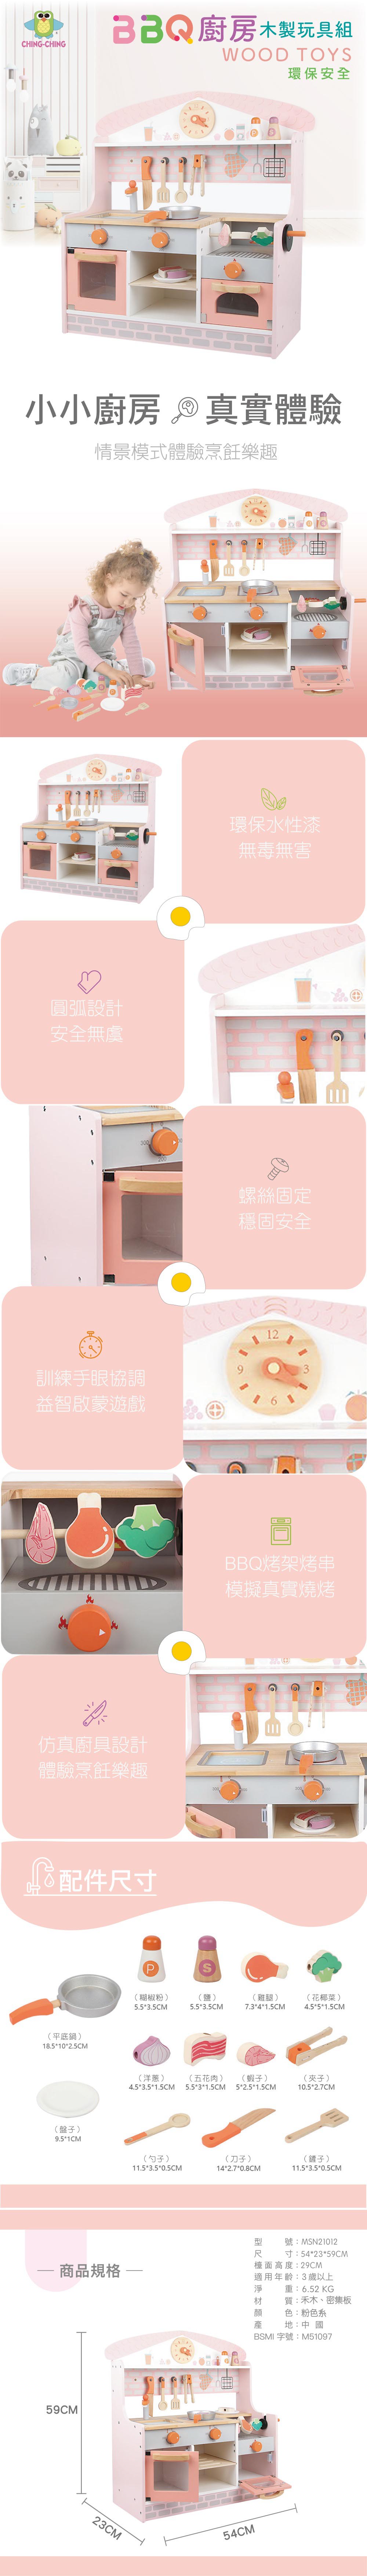 proimages/product/00021012-BBQ廚房木製玩具組-1.jpg